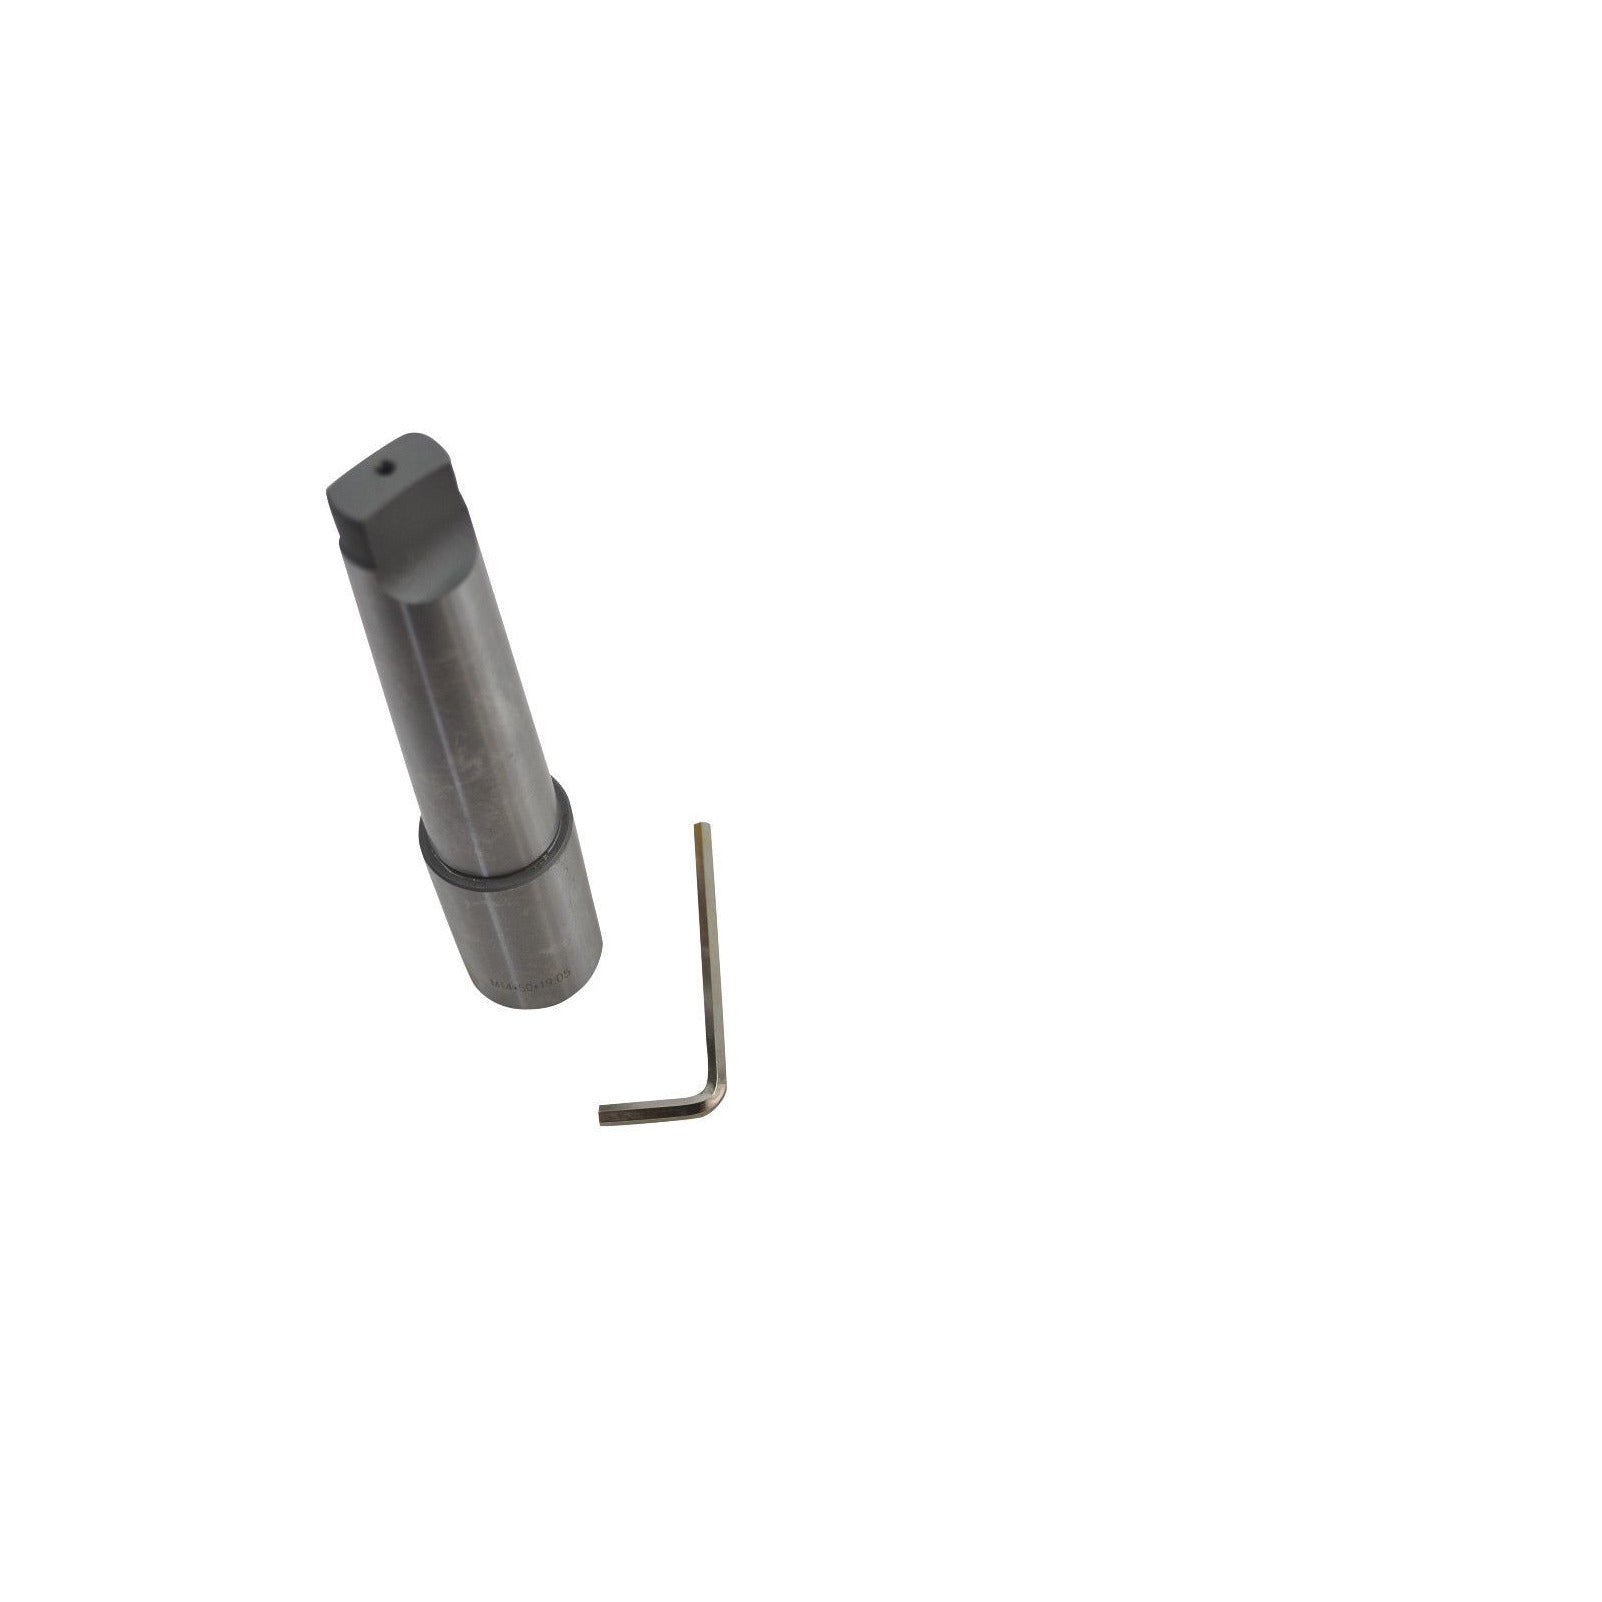 19mm 3/4" Weldon Holder Mt 4 Rota Broach Annular Cutter Adaptor Morse 4 taper